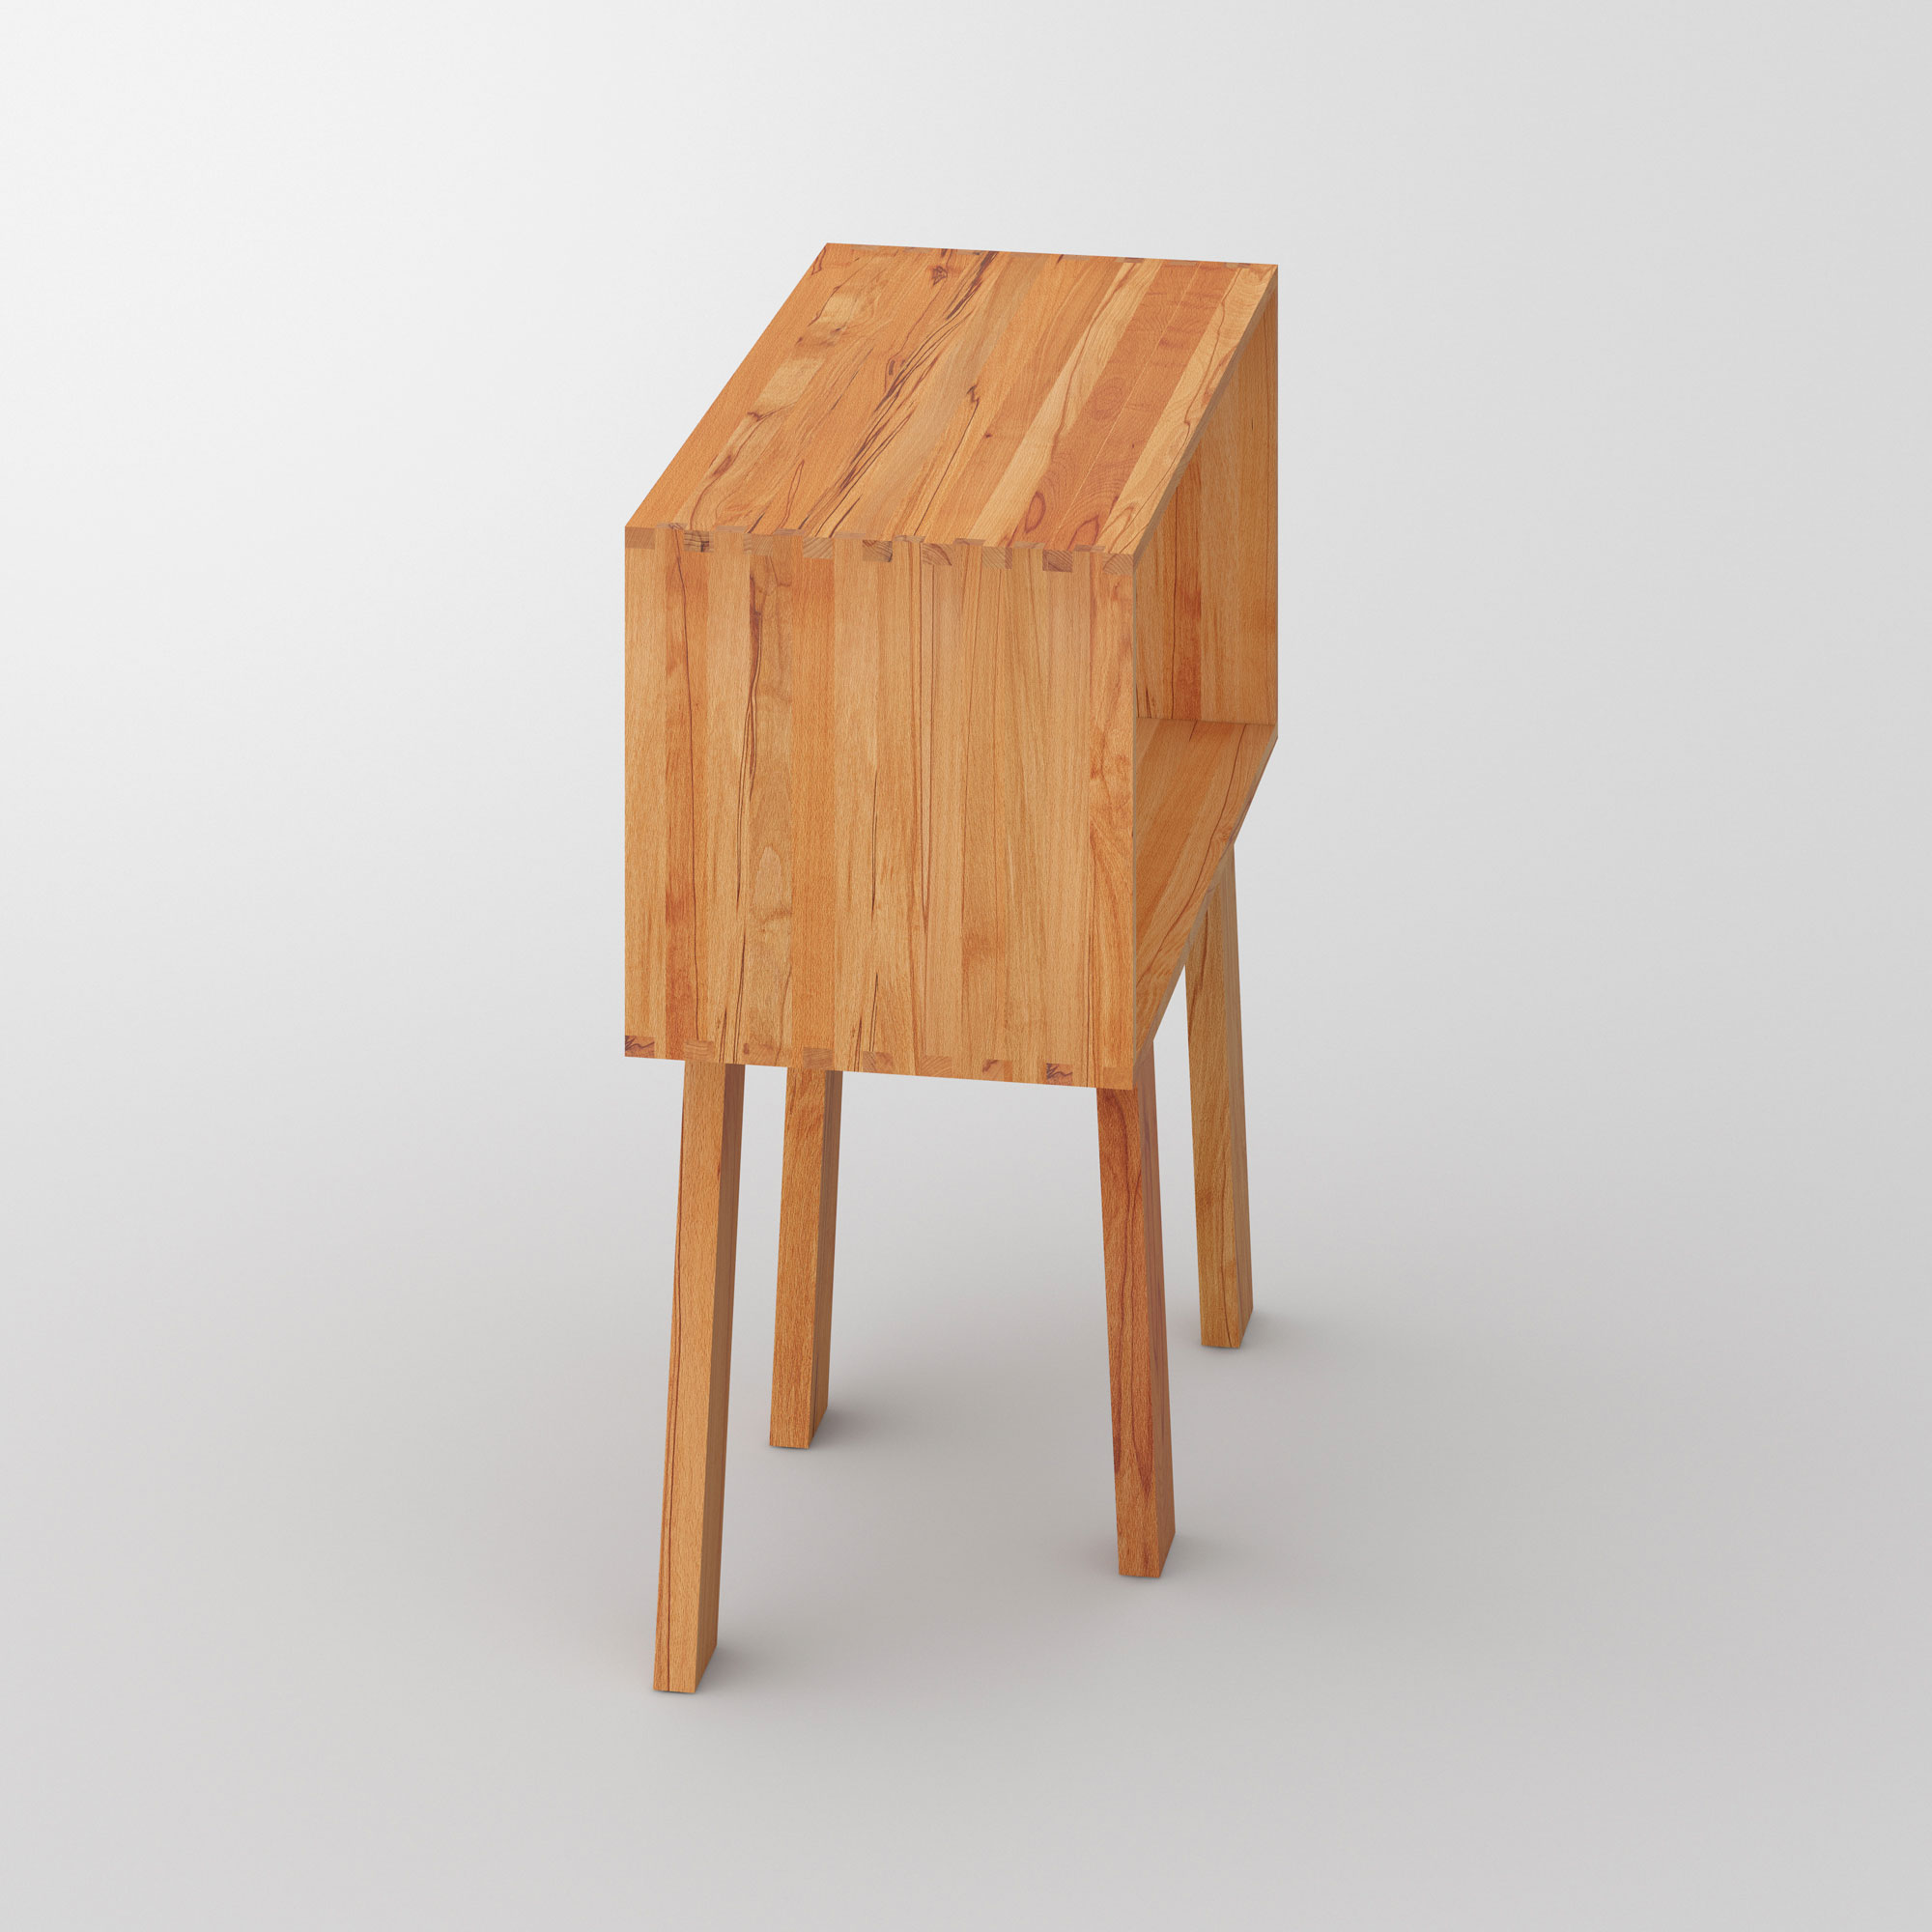 Designer Solid Wood Shelf GO cam2 custom made in solid wood by vitamin design